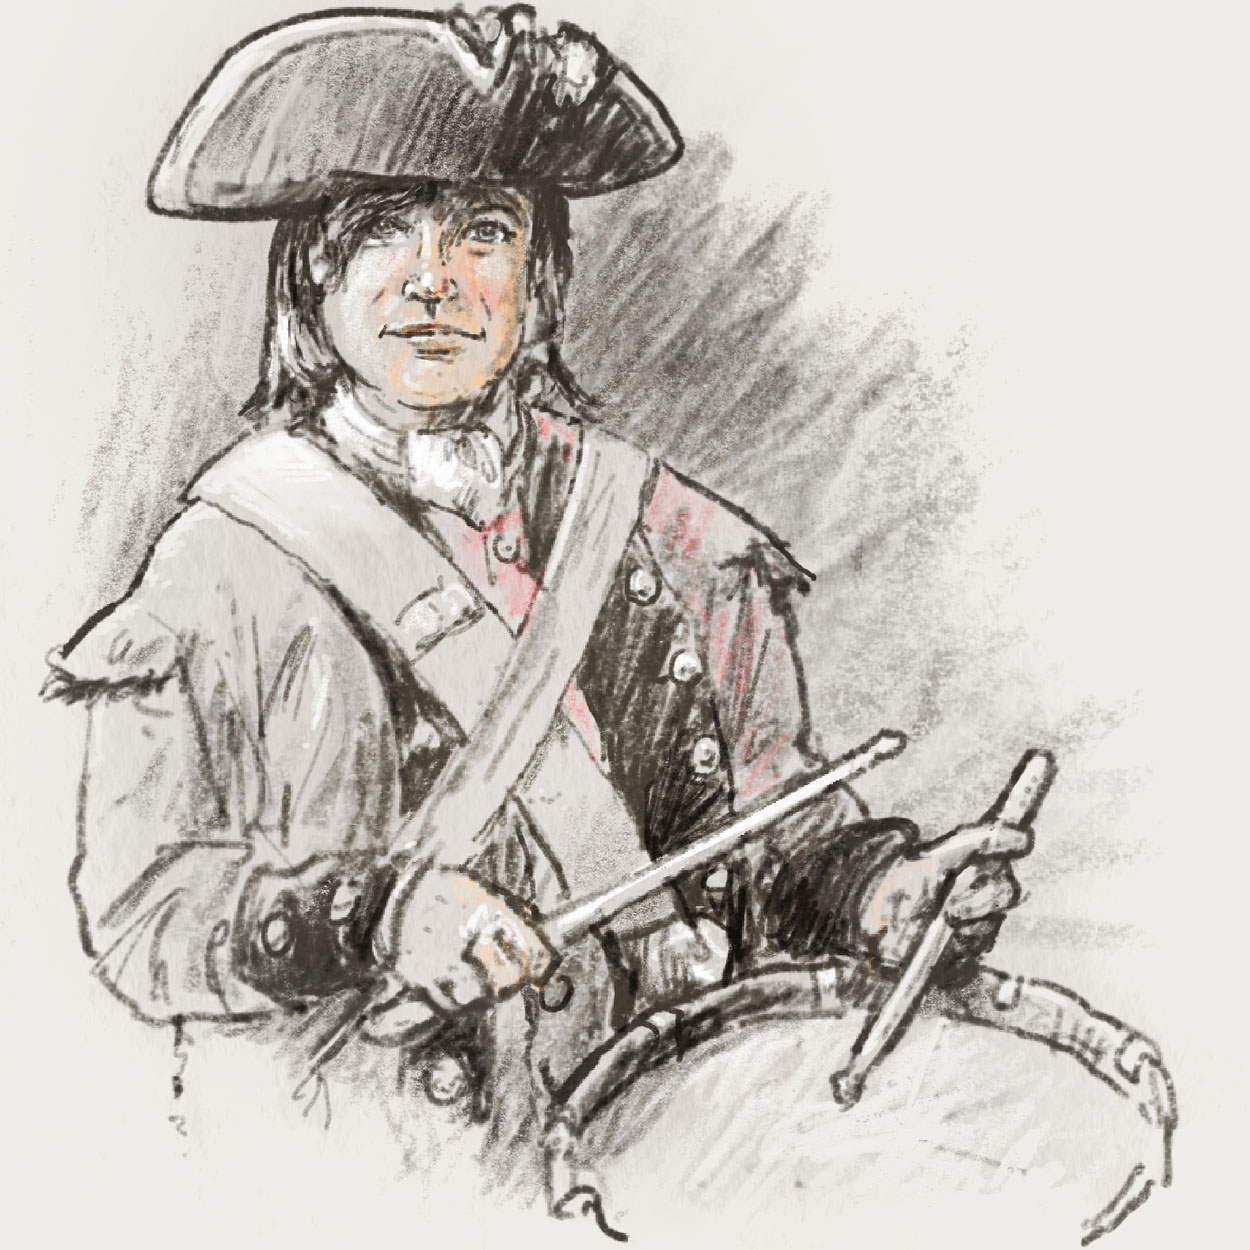 Drawn portrait of Stephen Tainter